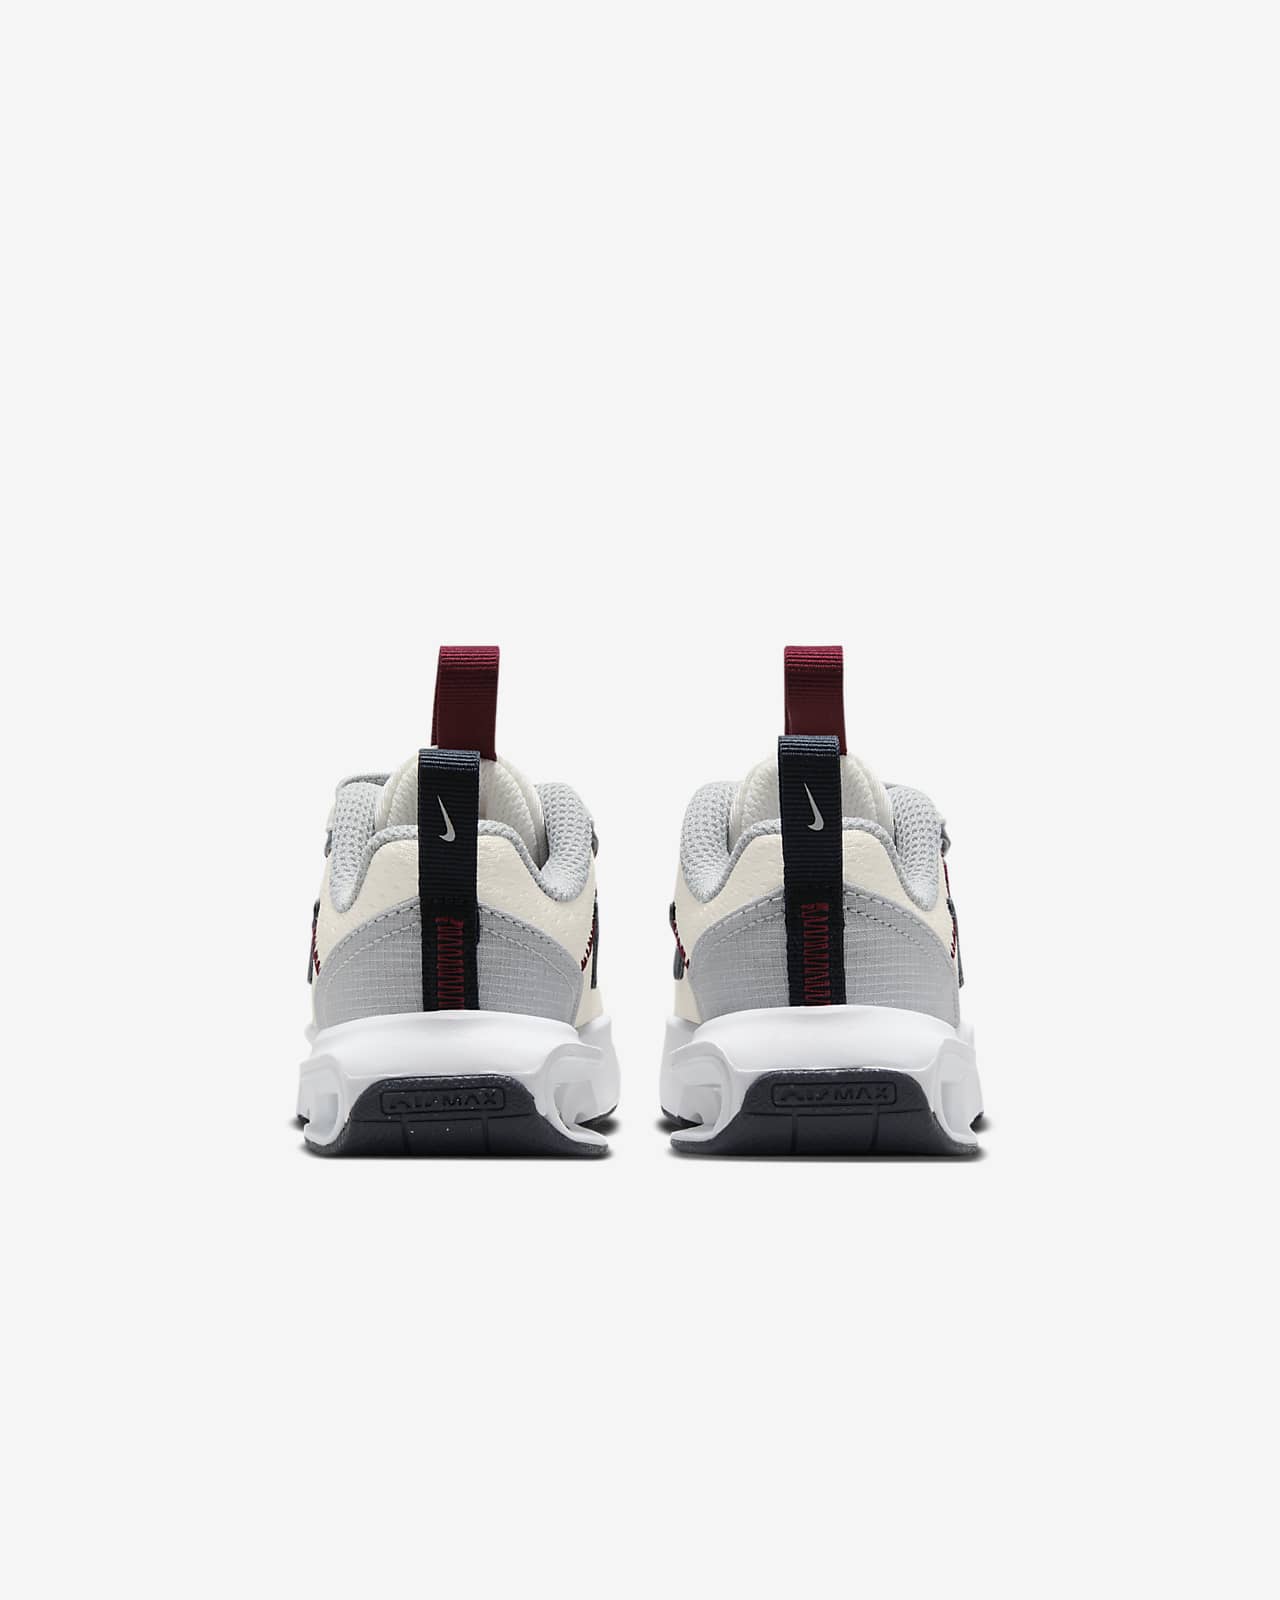 Nike Air Max 270 React Shoes